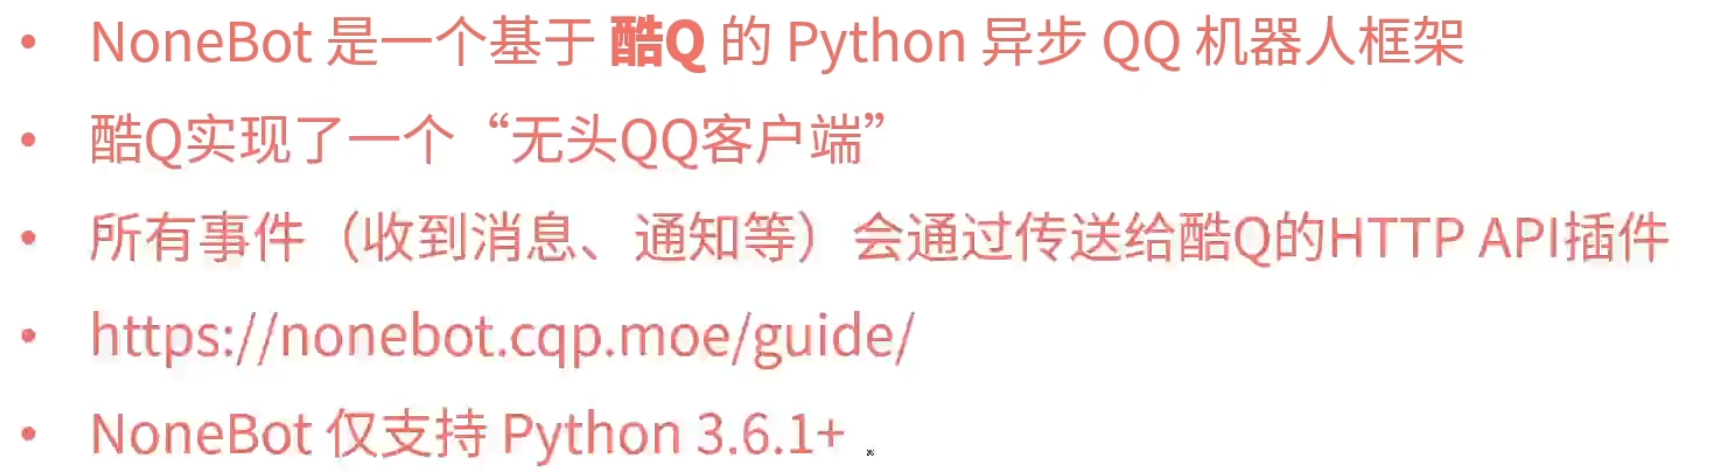 Python操作qq-NoneBot - 图2